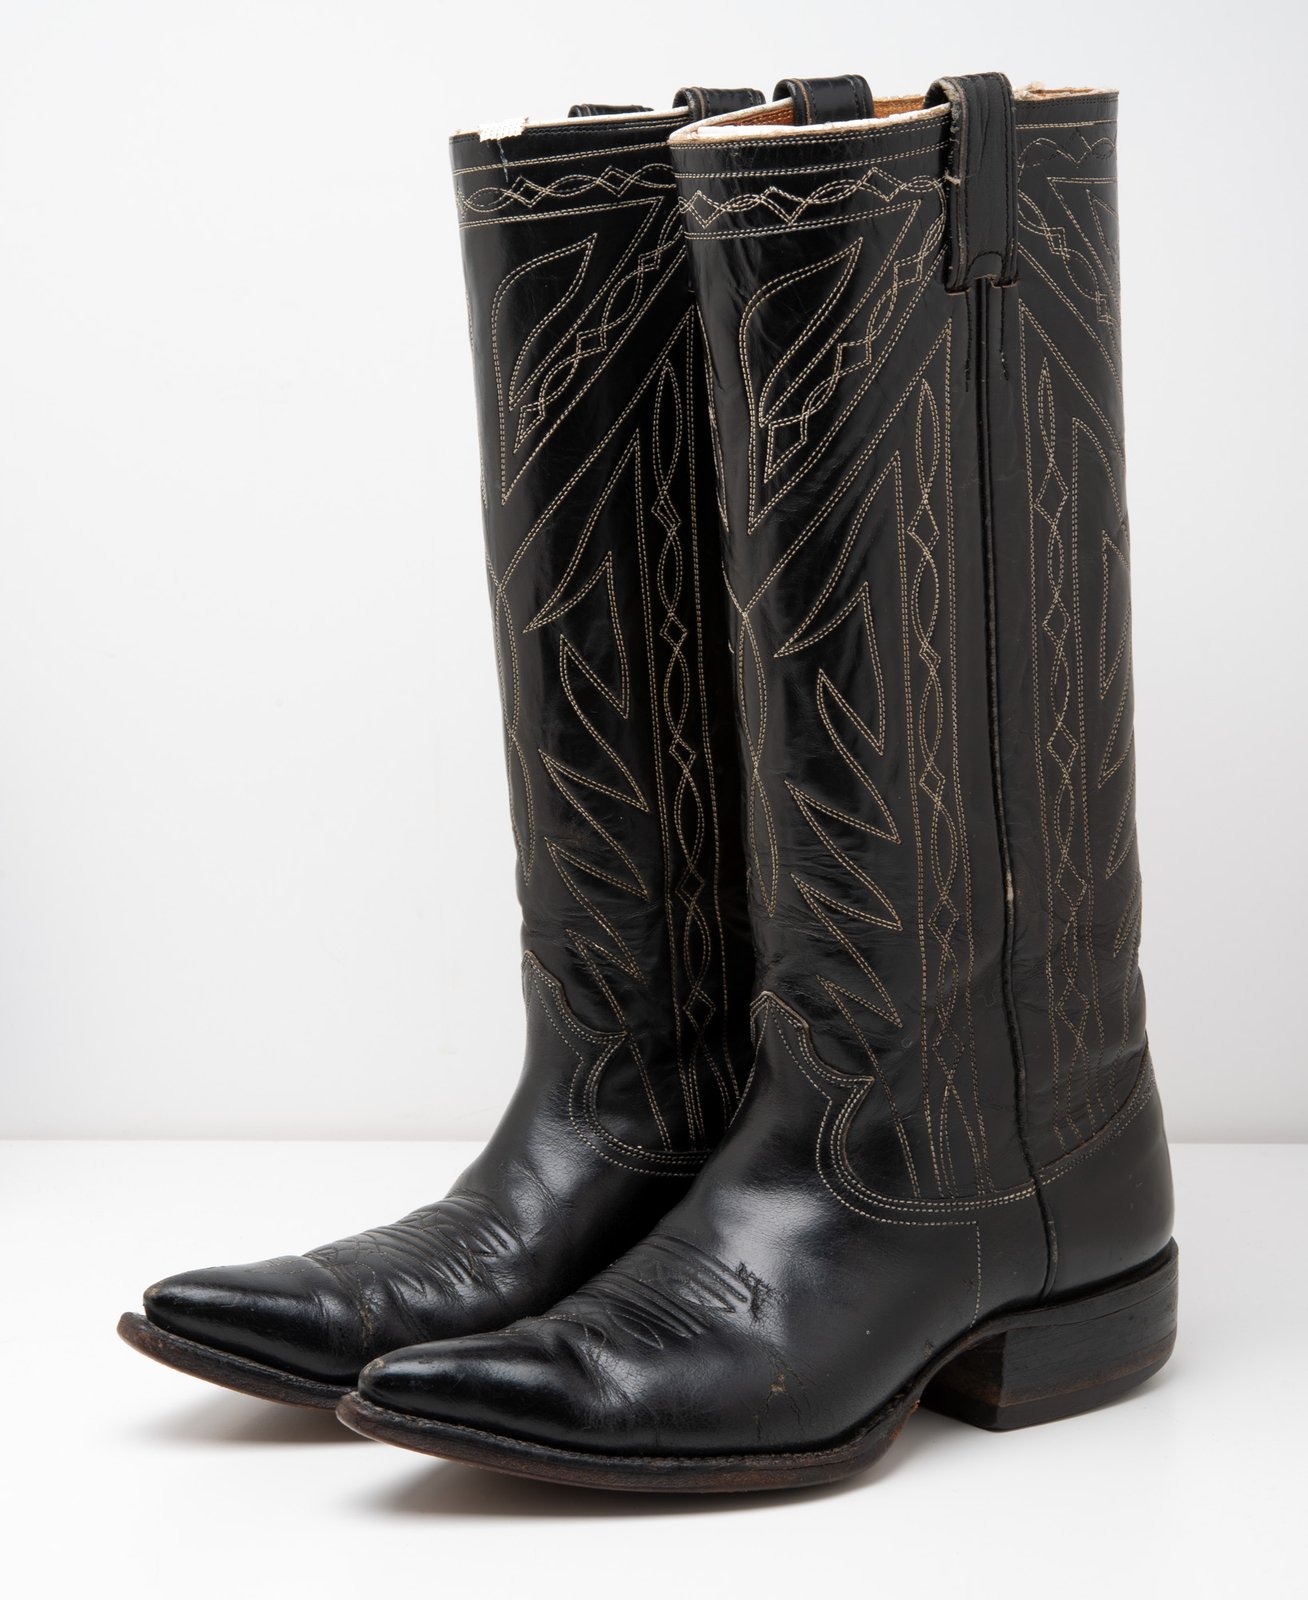 black boots white stitching